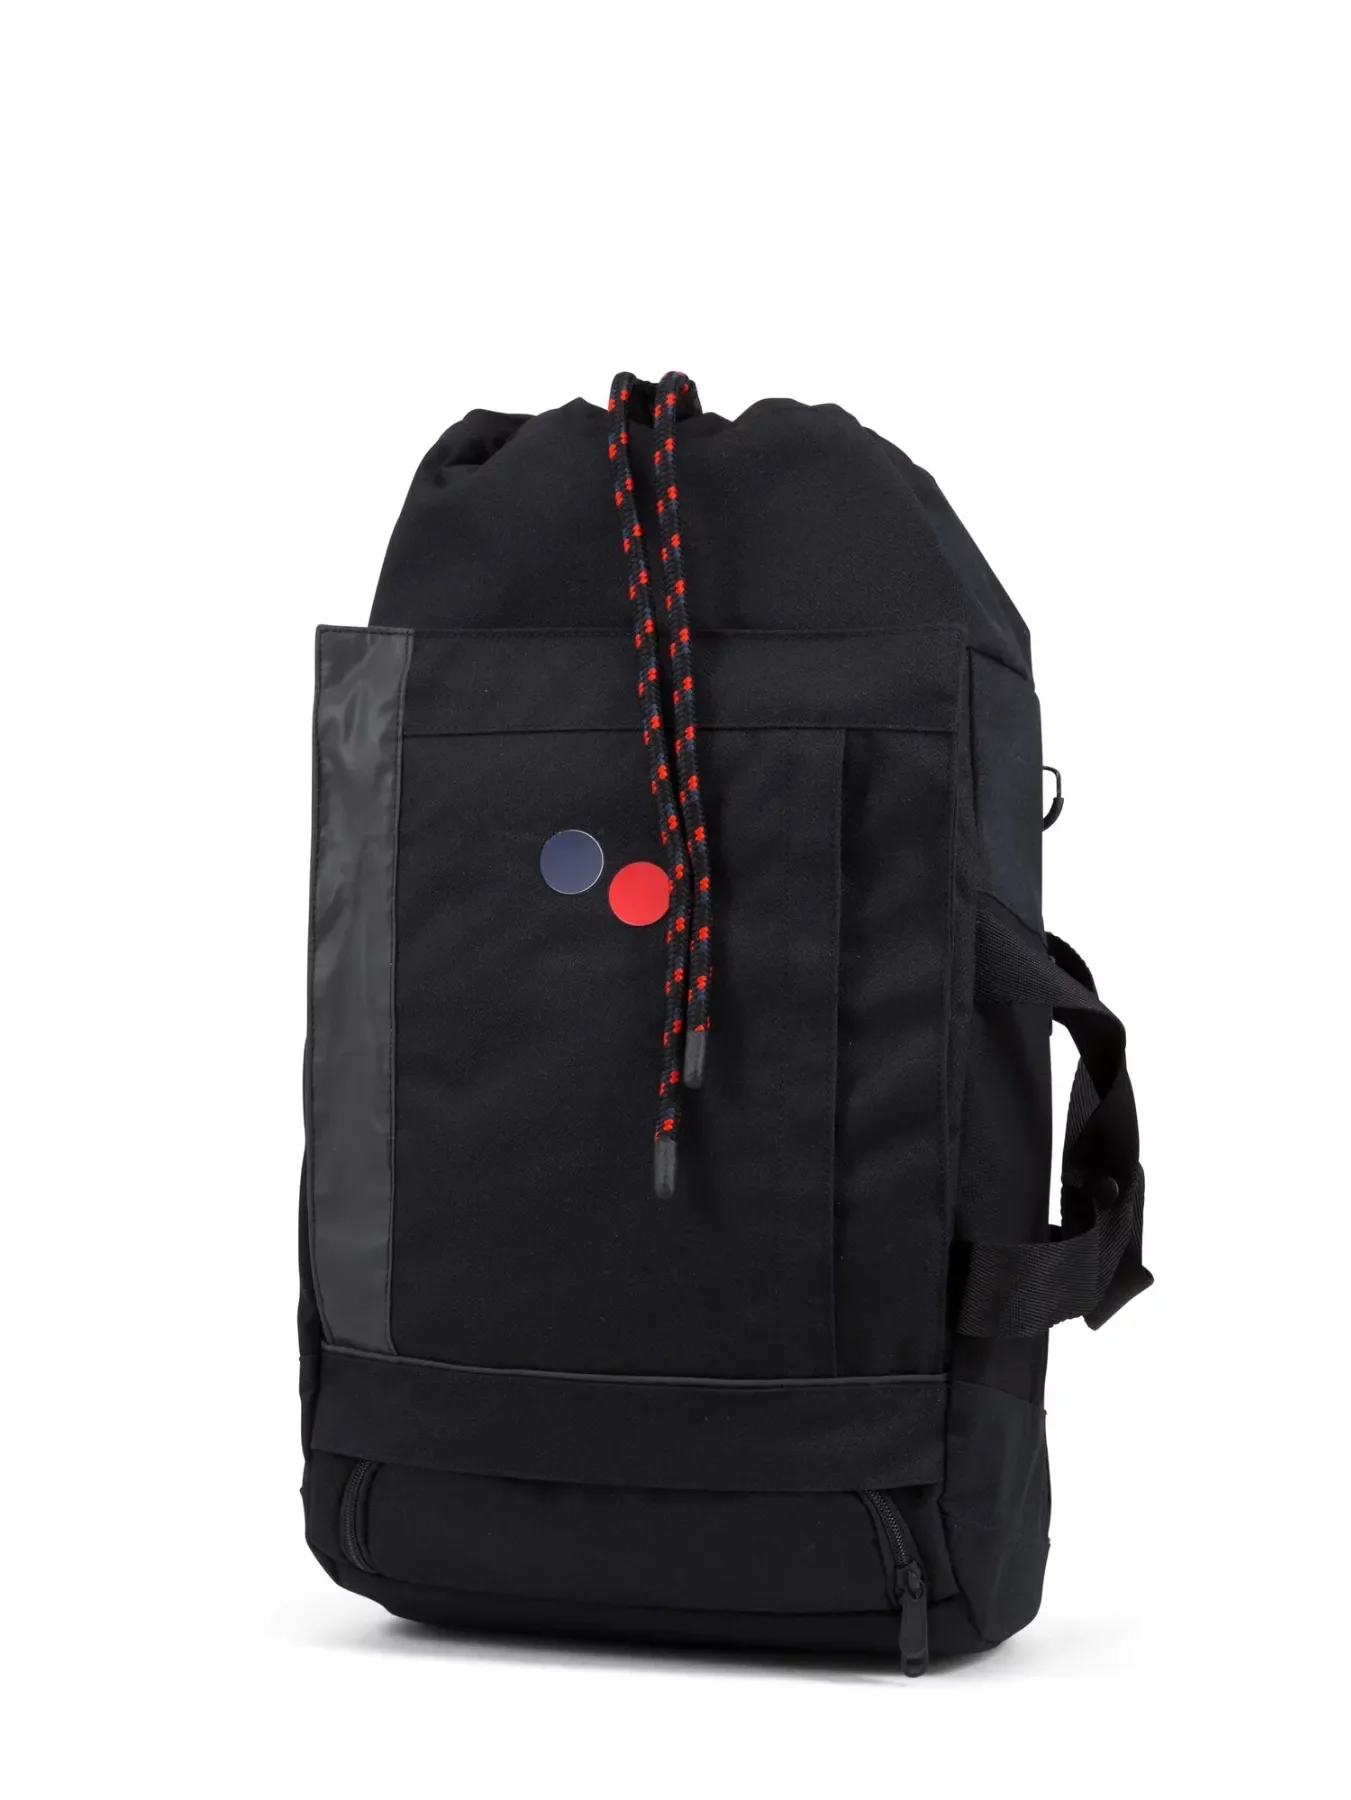 pinqponq Backpack BLOK medium - Licorice Black 2